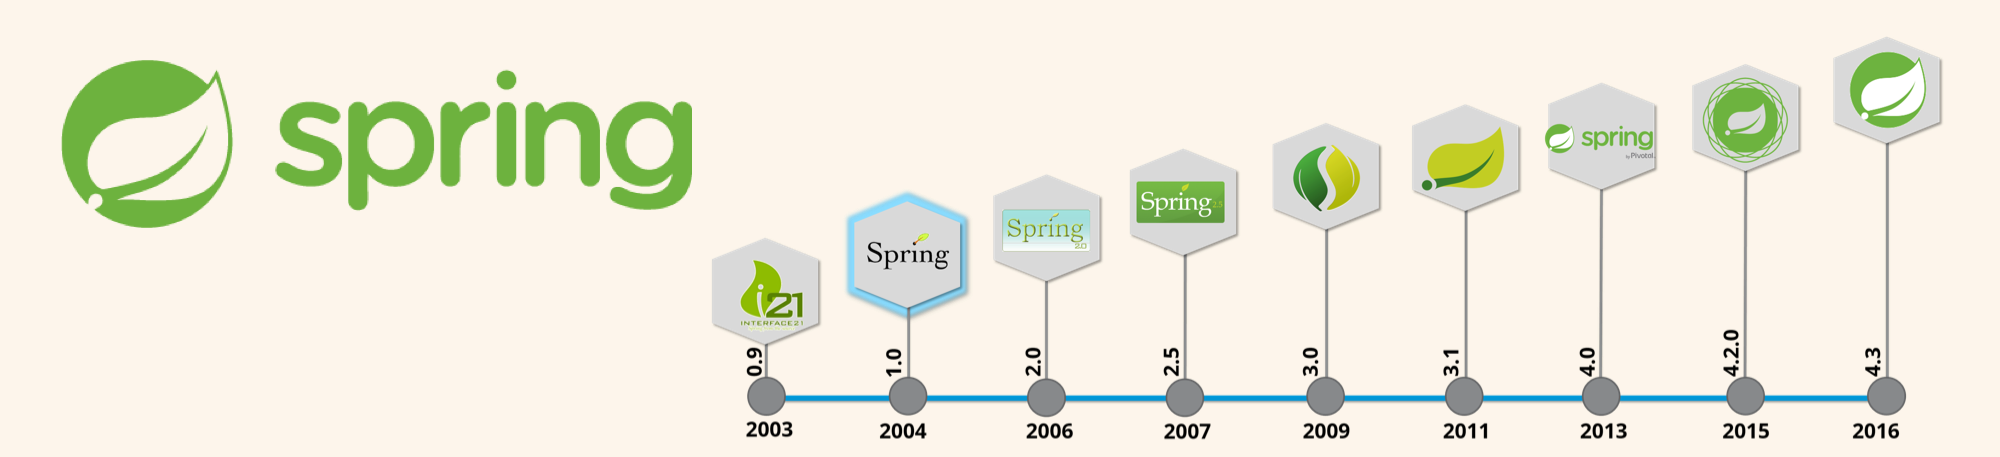 Import spring. Spring MVC IOT. Spring goal. Spring as source.